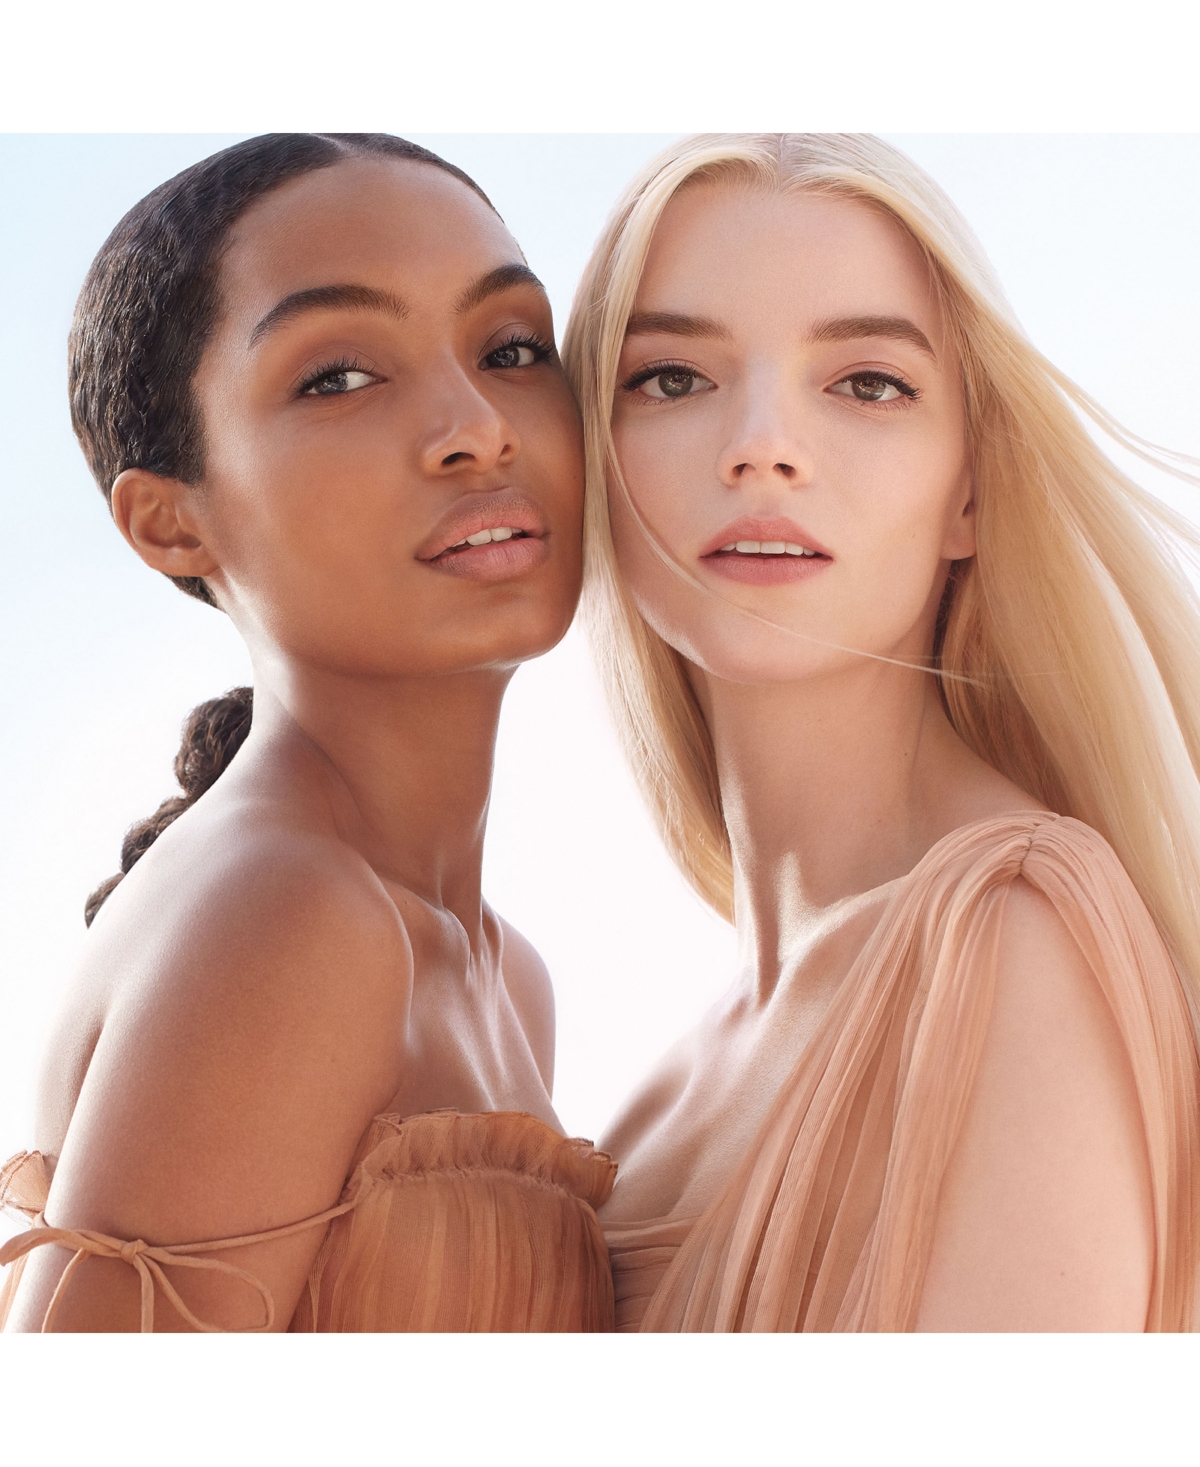 Shop Dior Forever Skin Correct Full-coverage Concealer In N Neutral (dark Skin With Neutral Beig